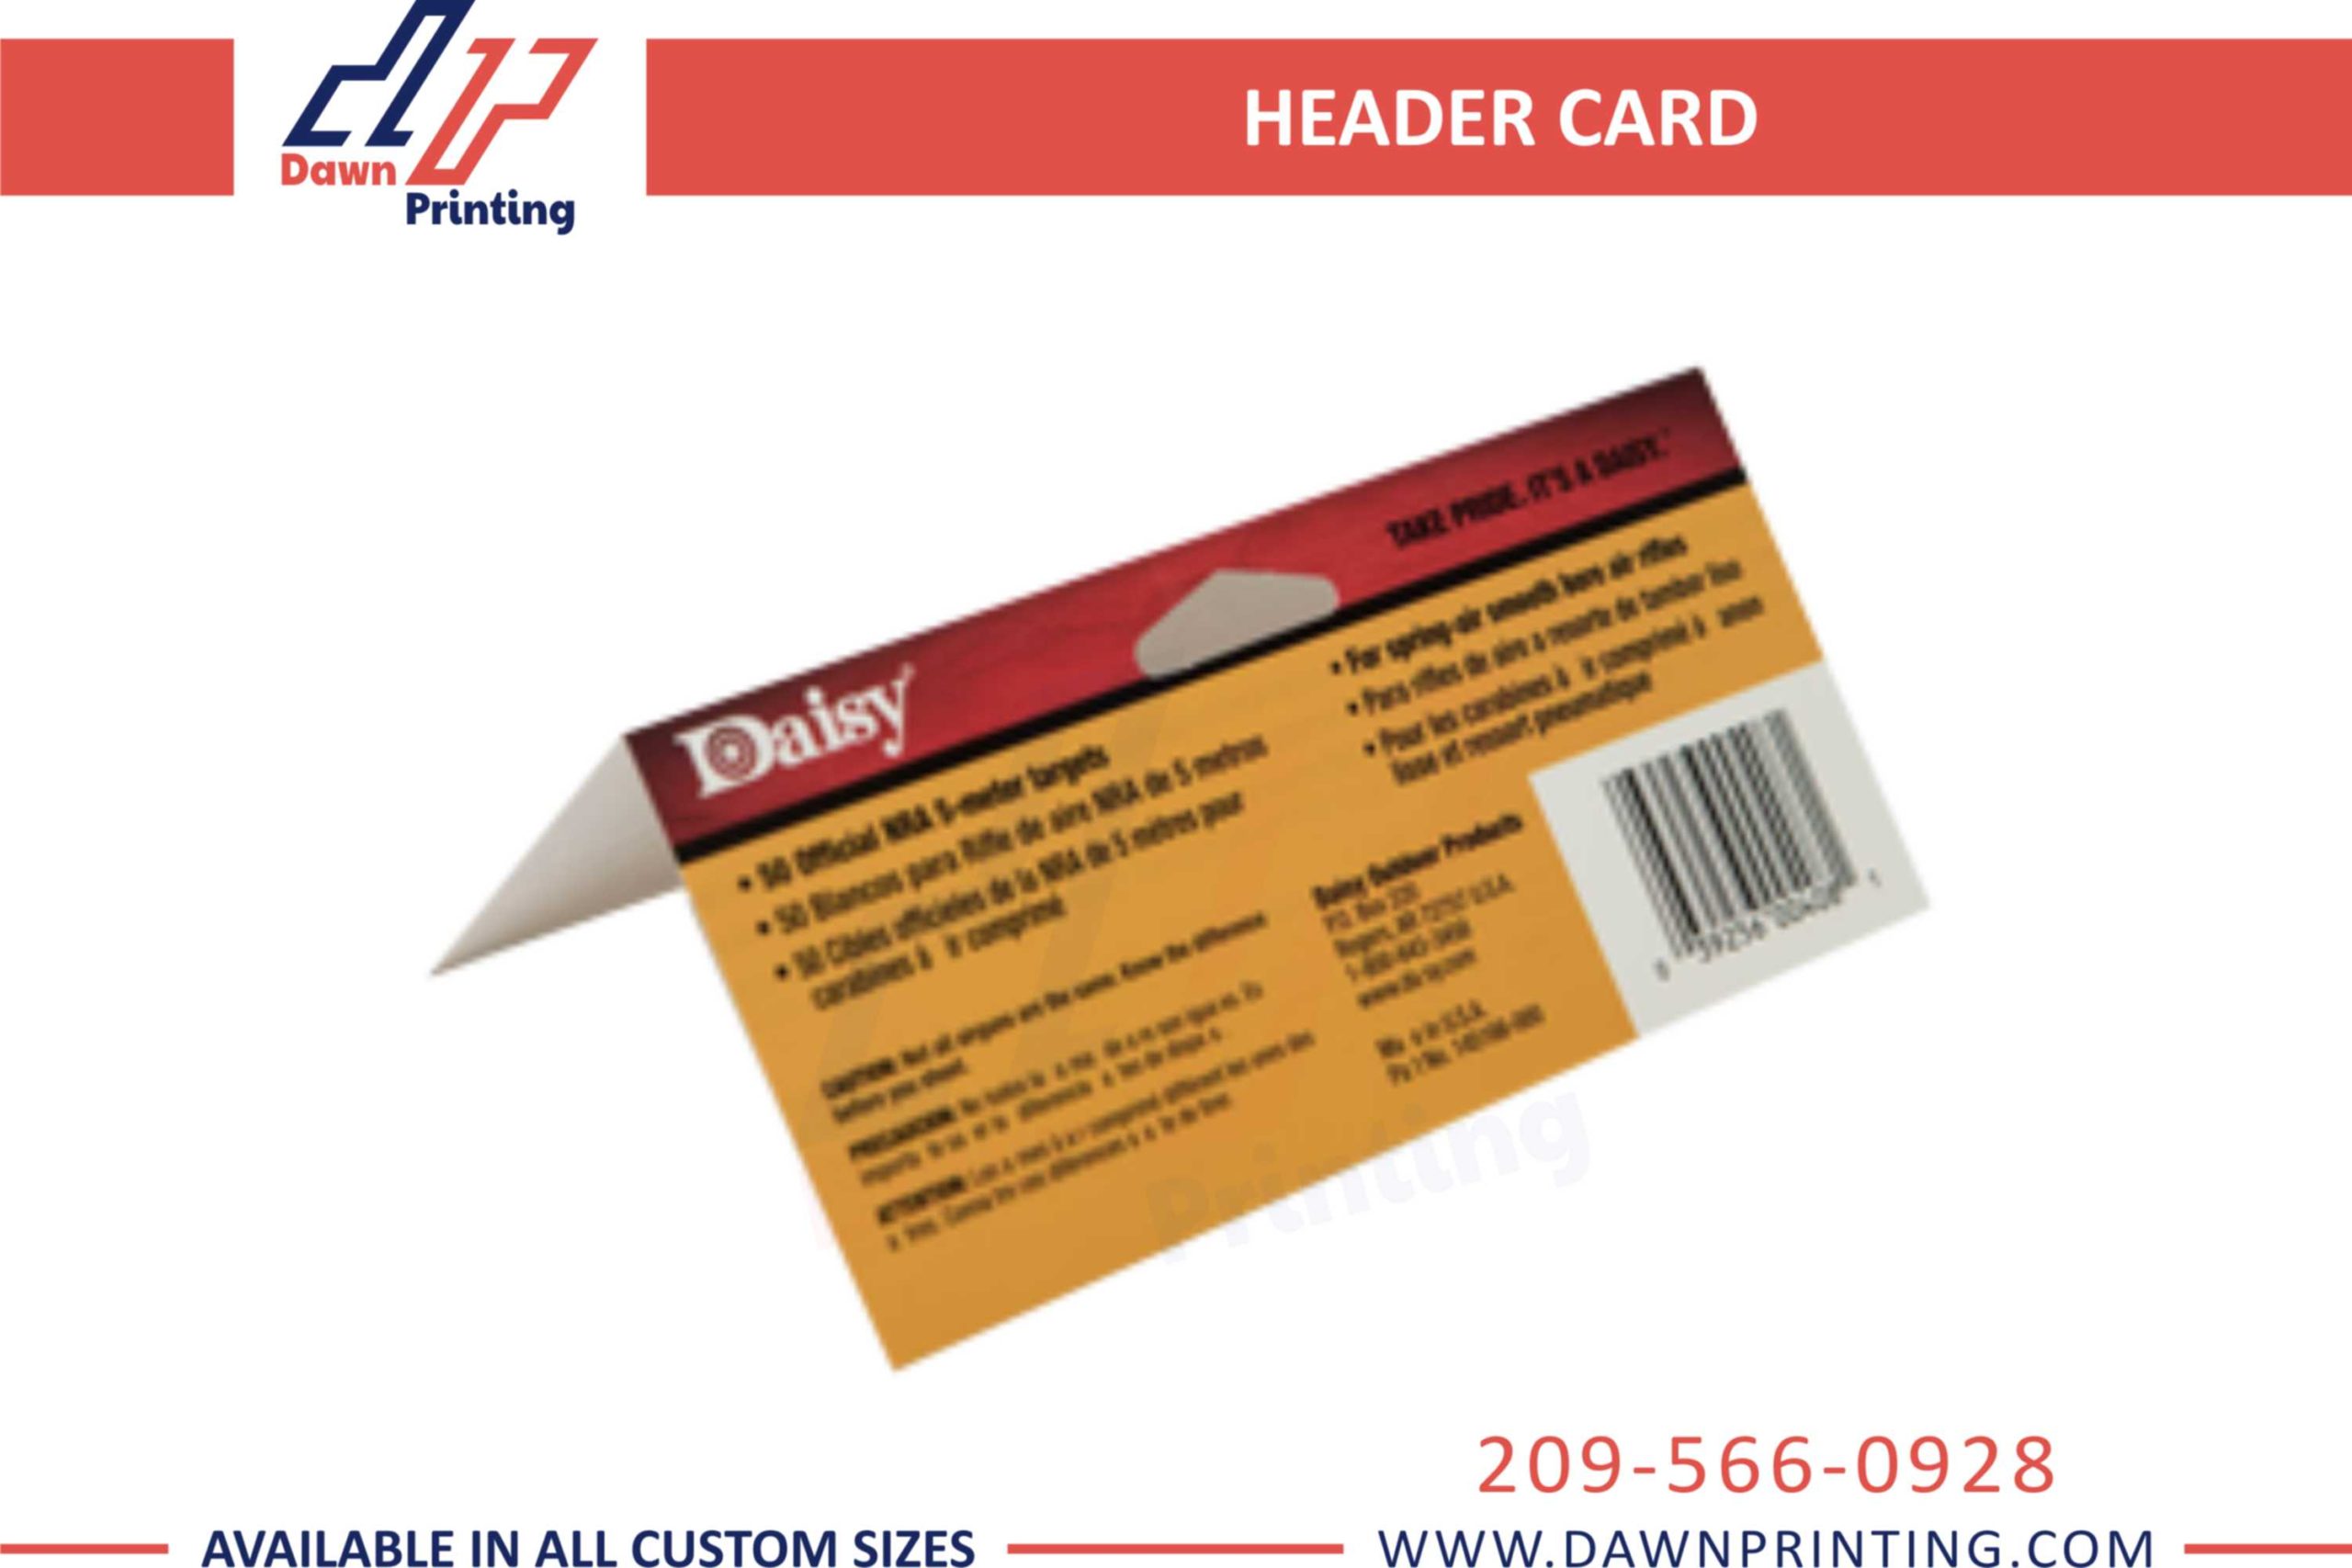 Wholesale Header Cards - Dawn Printing